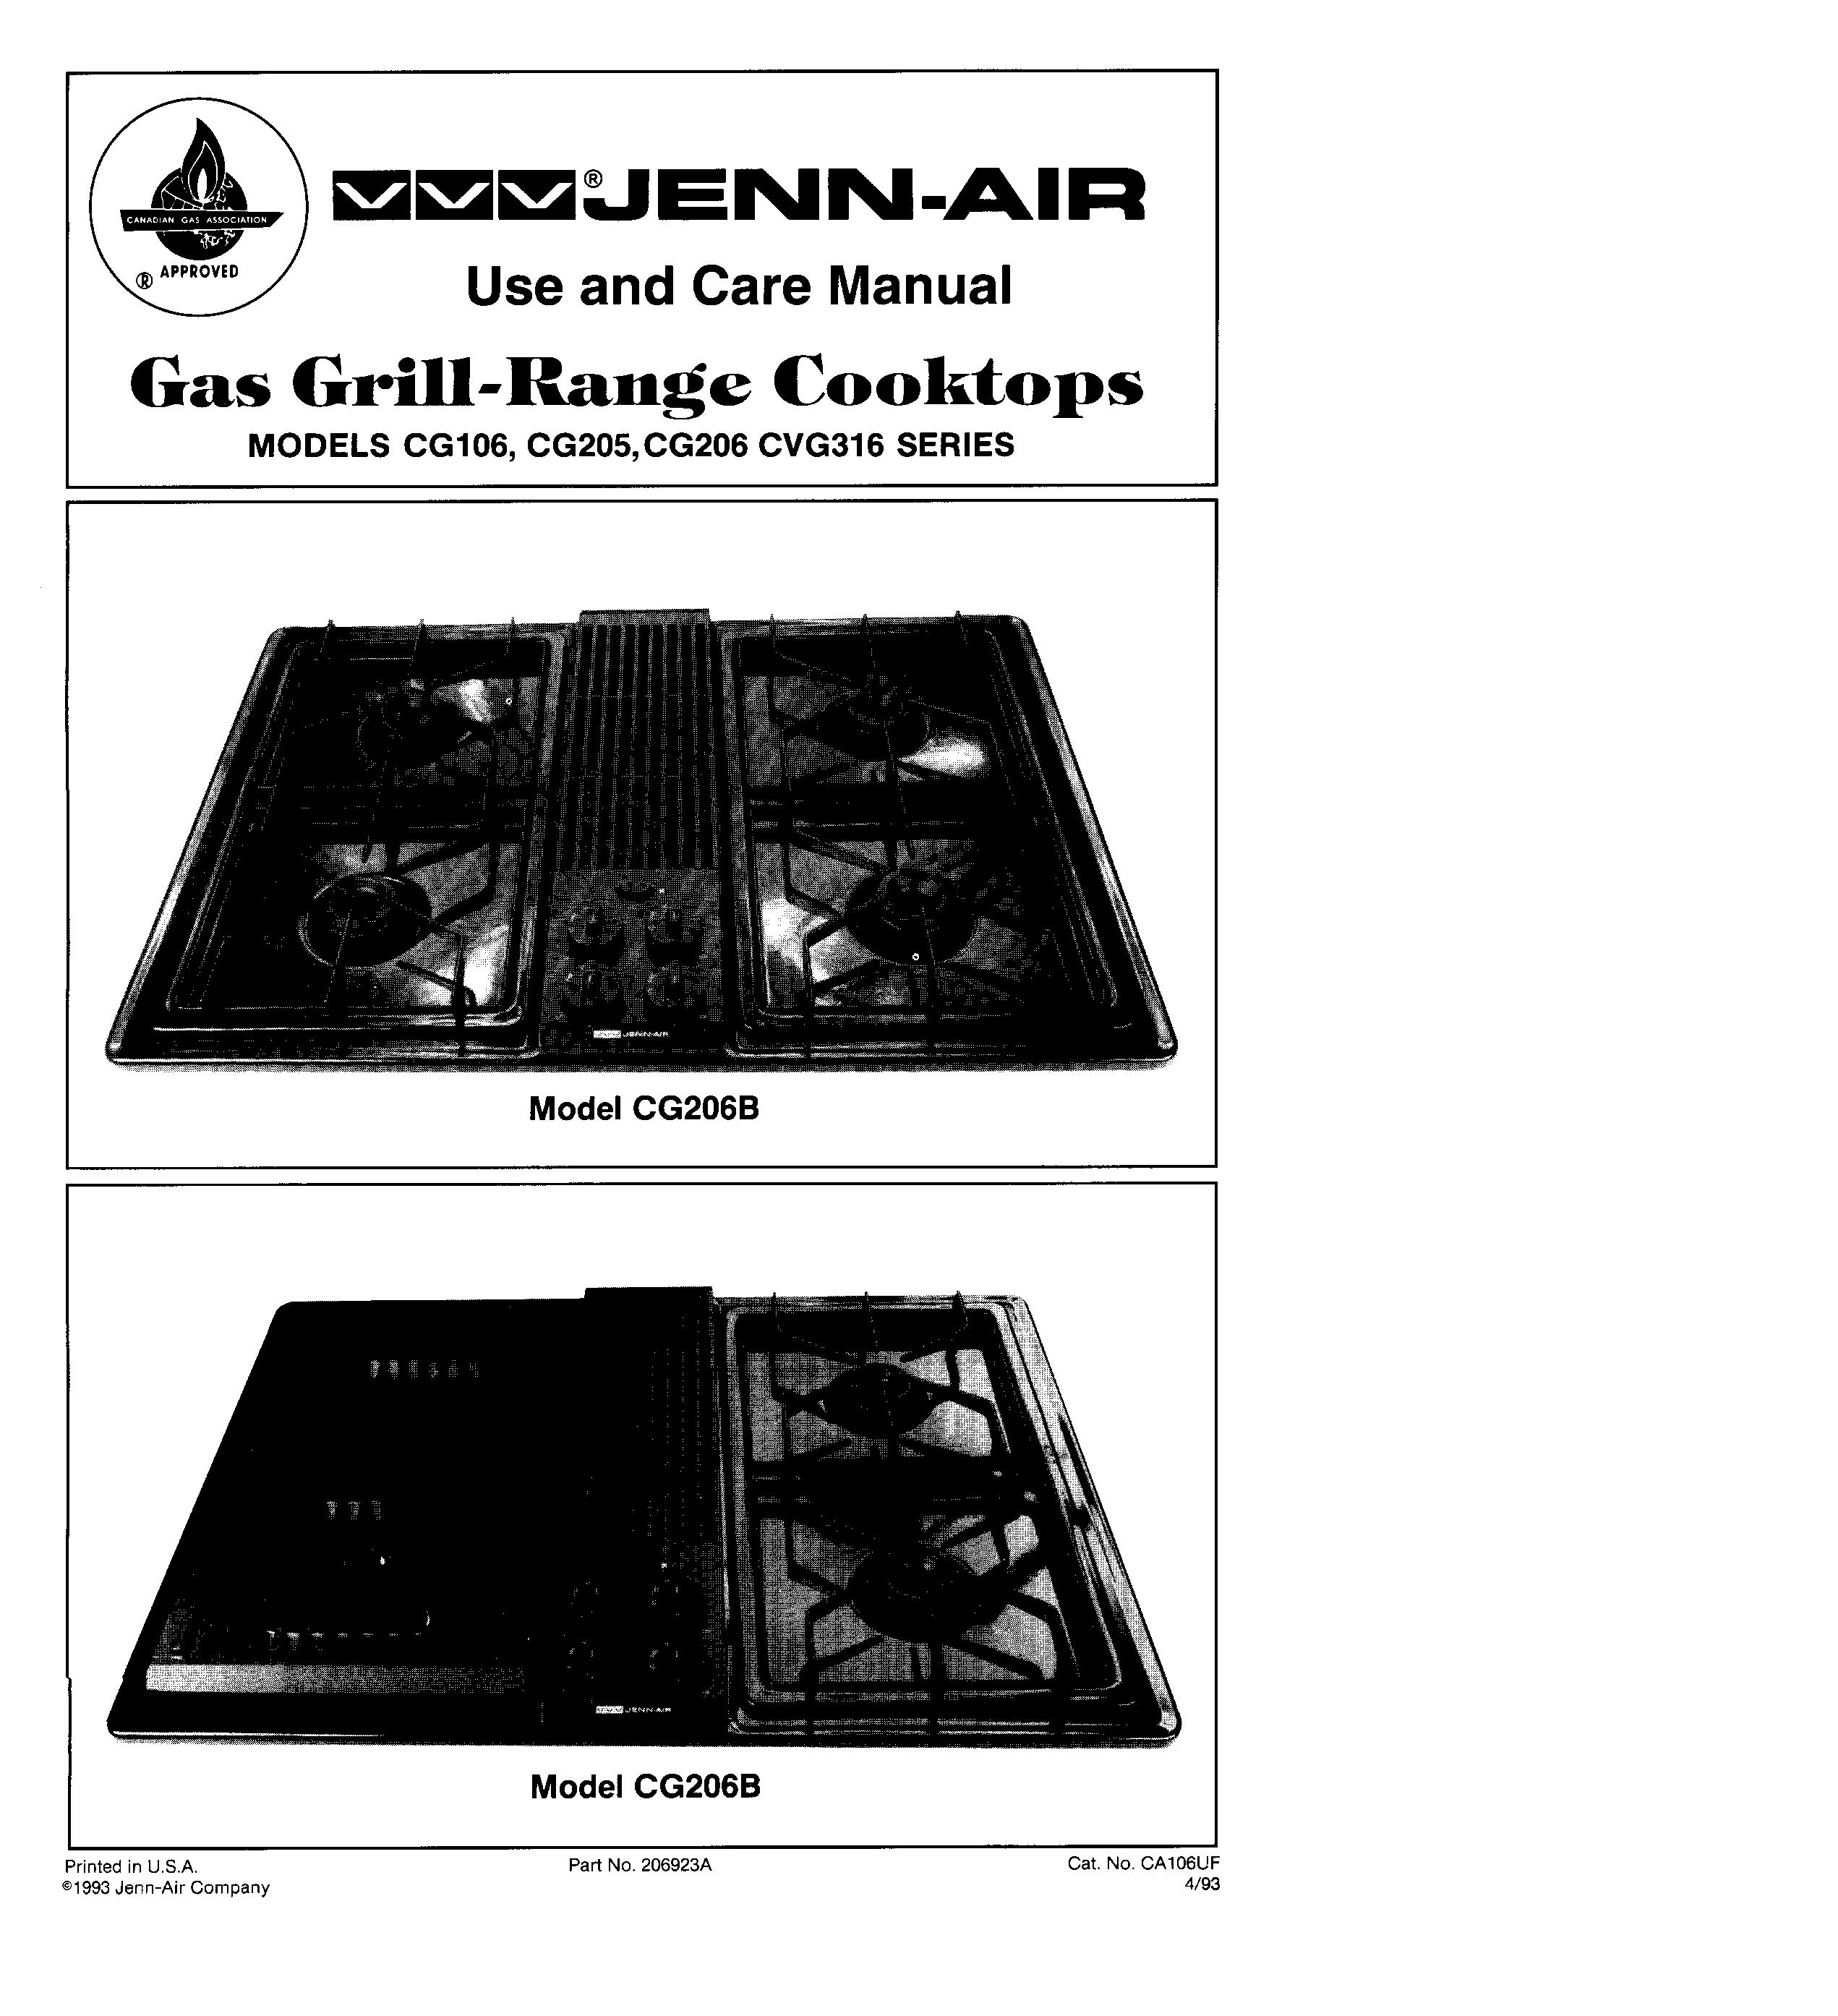 Jenn-Air CVG316 Gas Grill User Manual